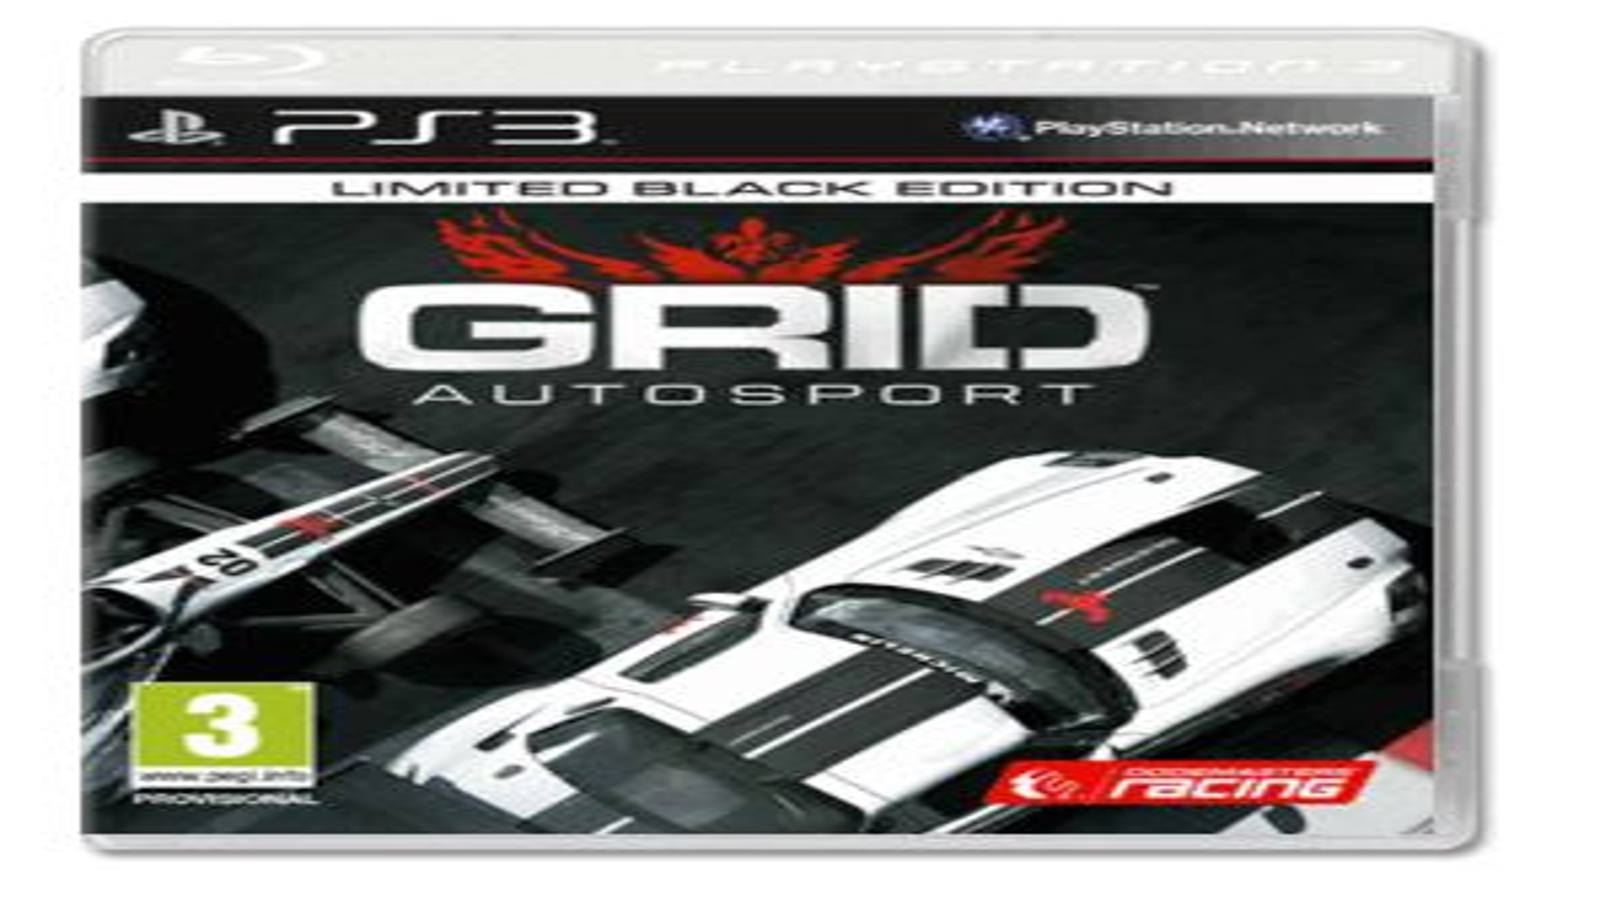 GRID Autosport - Playstation 3 Black Edition